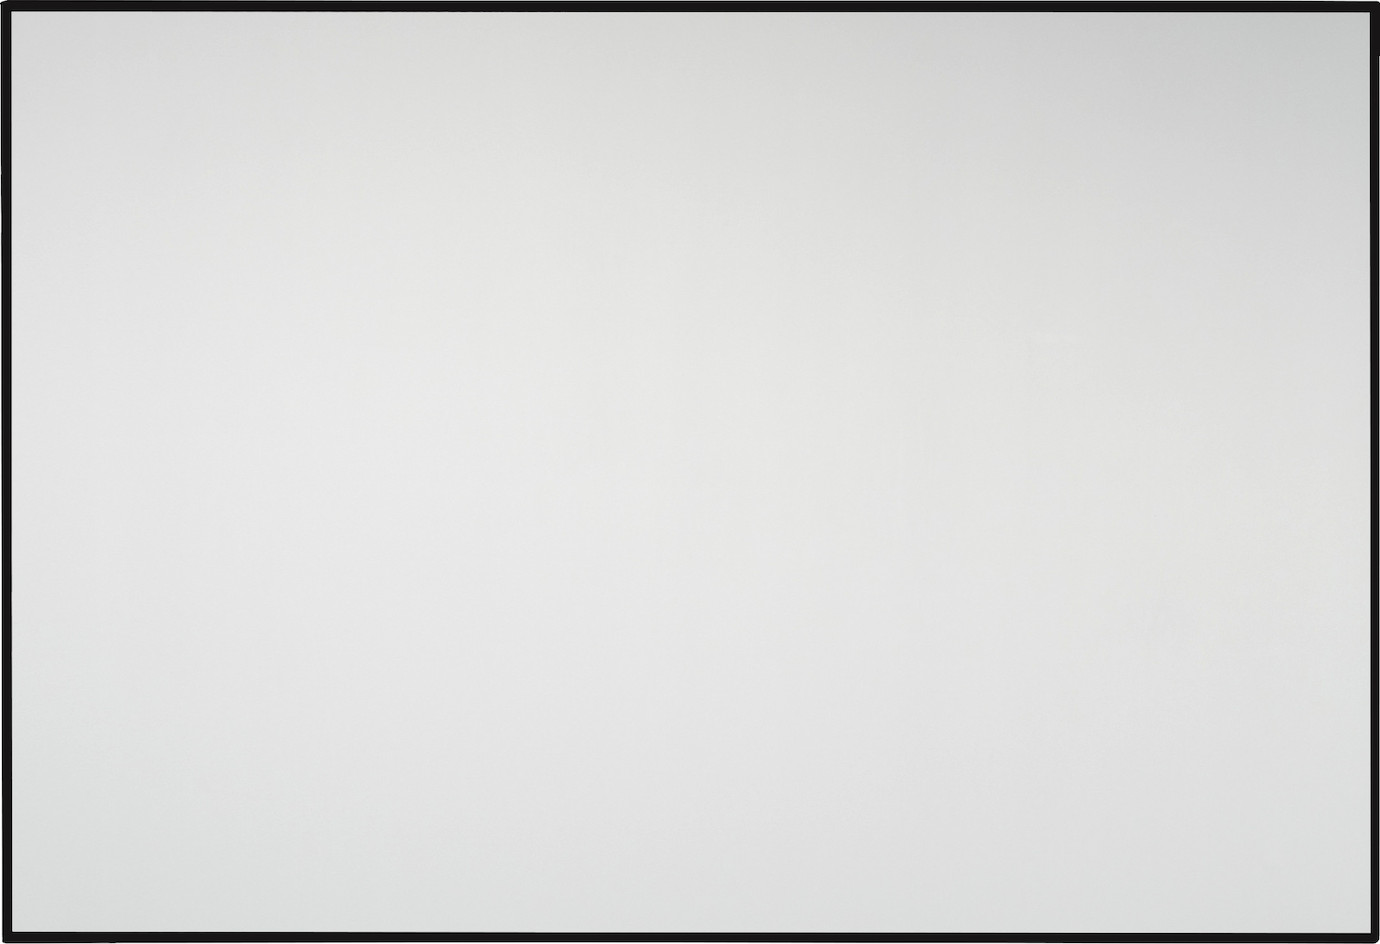 celexon HomeCinema Frame 220 x 124 cm, 100" - Dynamic Slate ALR